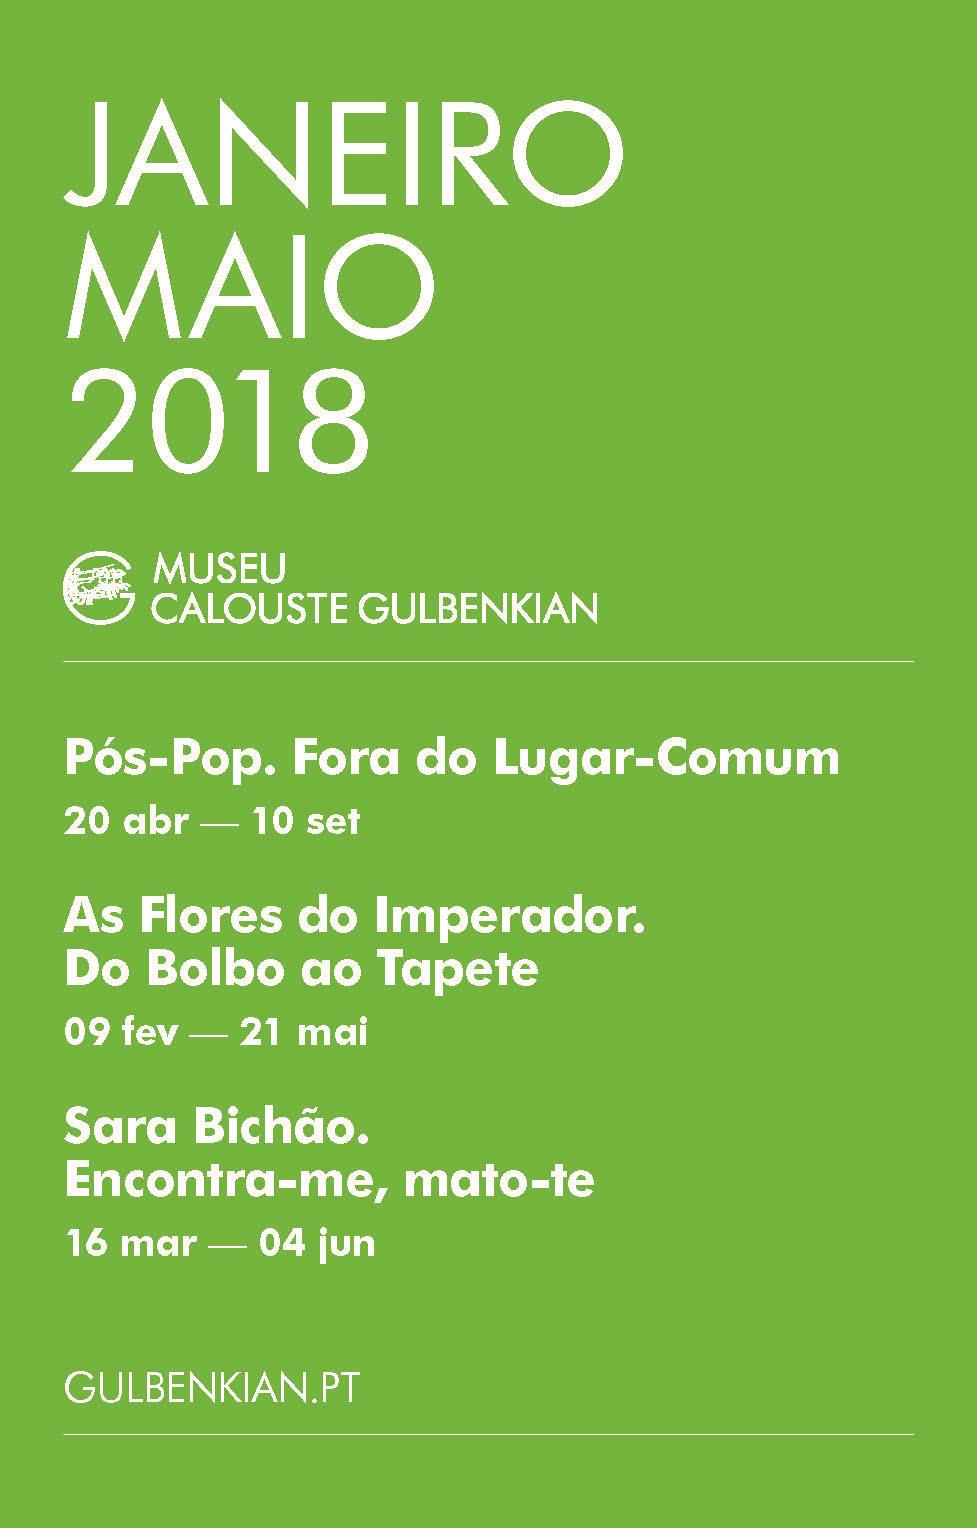 Museu Calouste Gulbenkian. Exposições Janeiro – Maio 2018